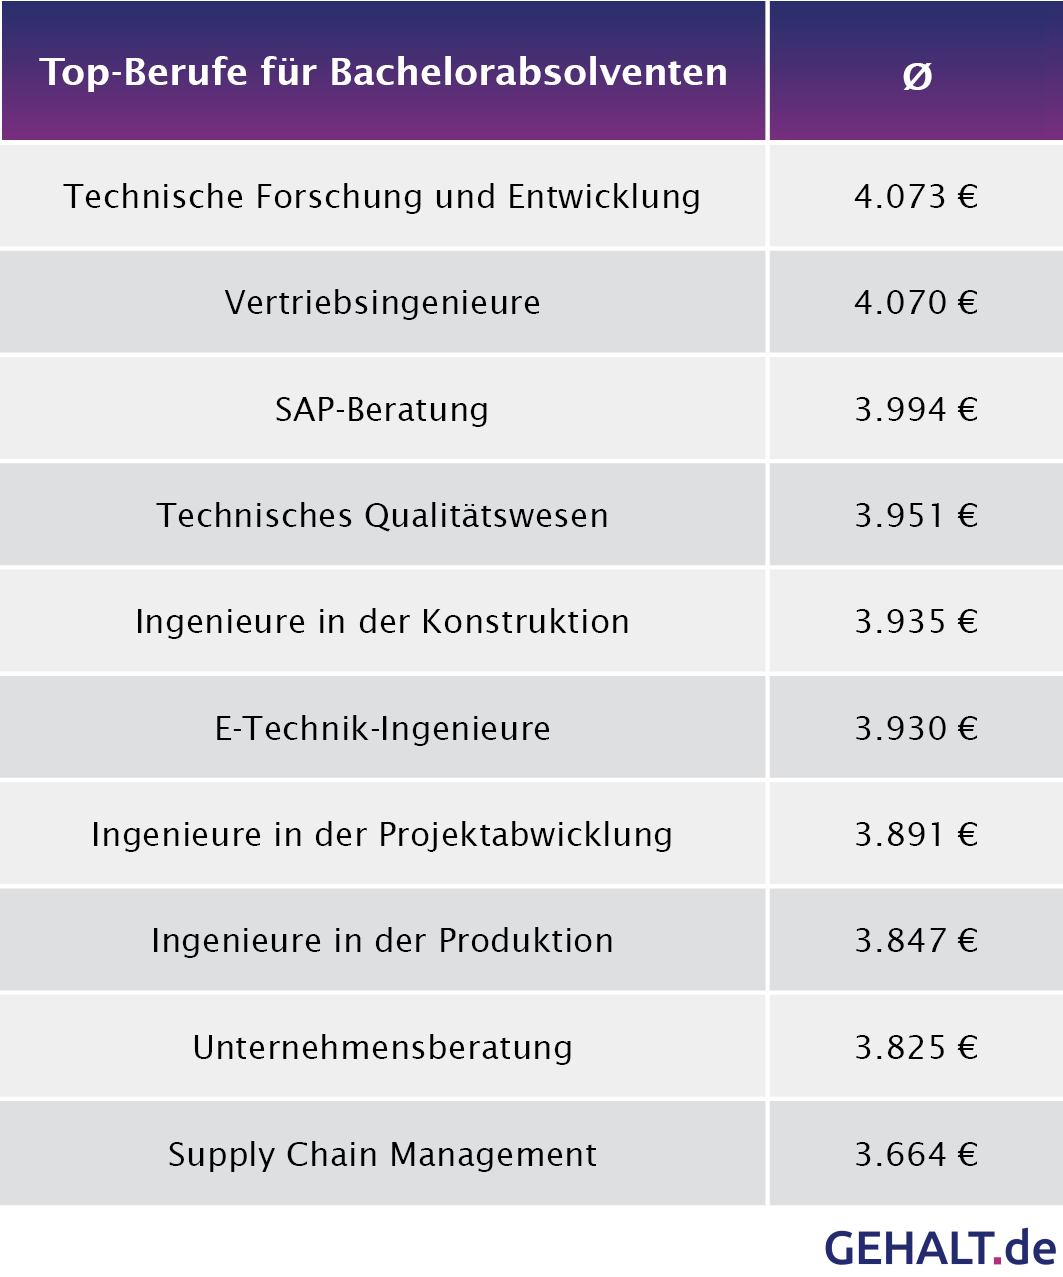 Gehalt Bachelorabsolventen. Quelle: gehalt.de